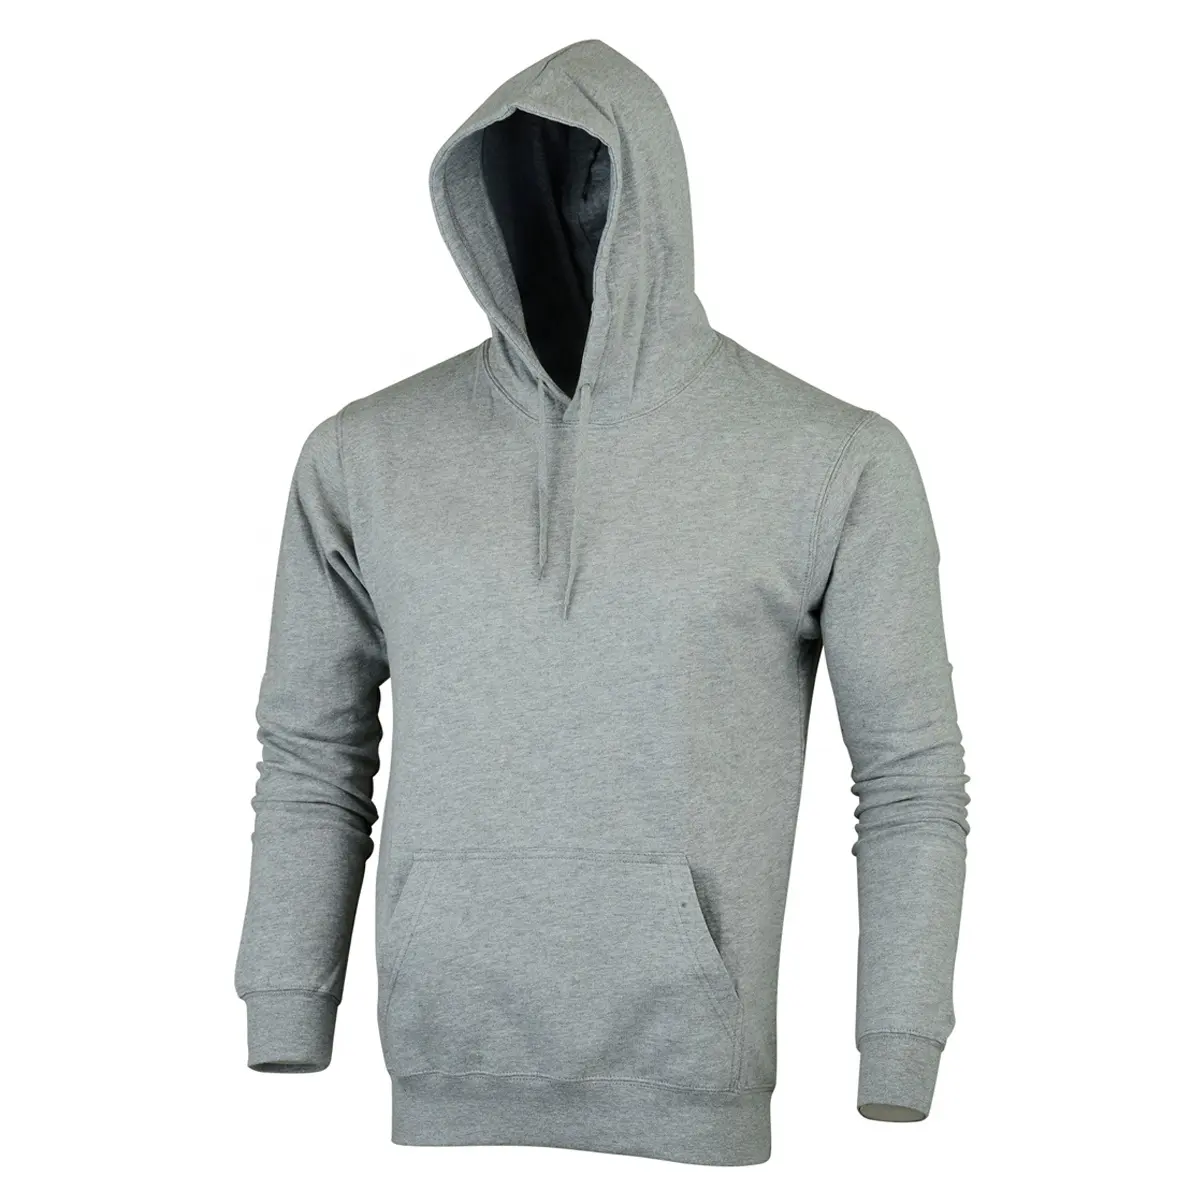 2021 wholesale custom logo zipper sweatshirt men's hoodies High Quality Fleece Fashion Hooded Shirt